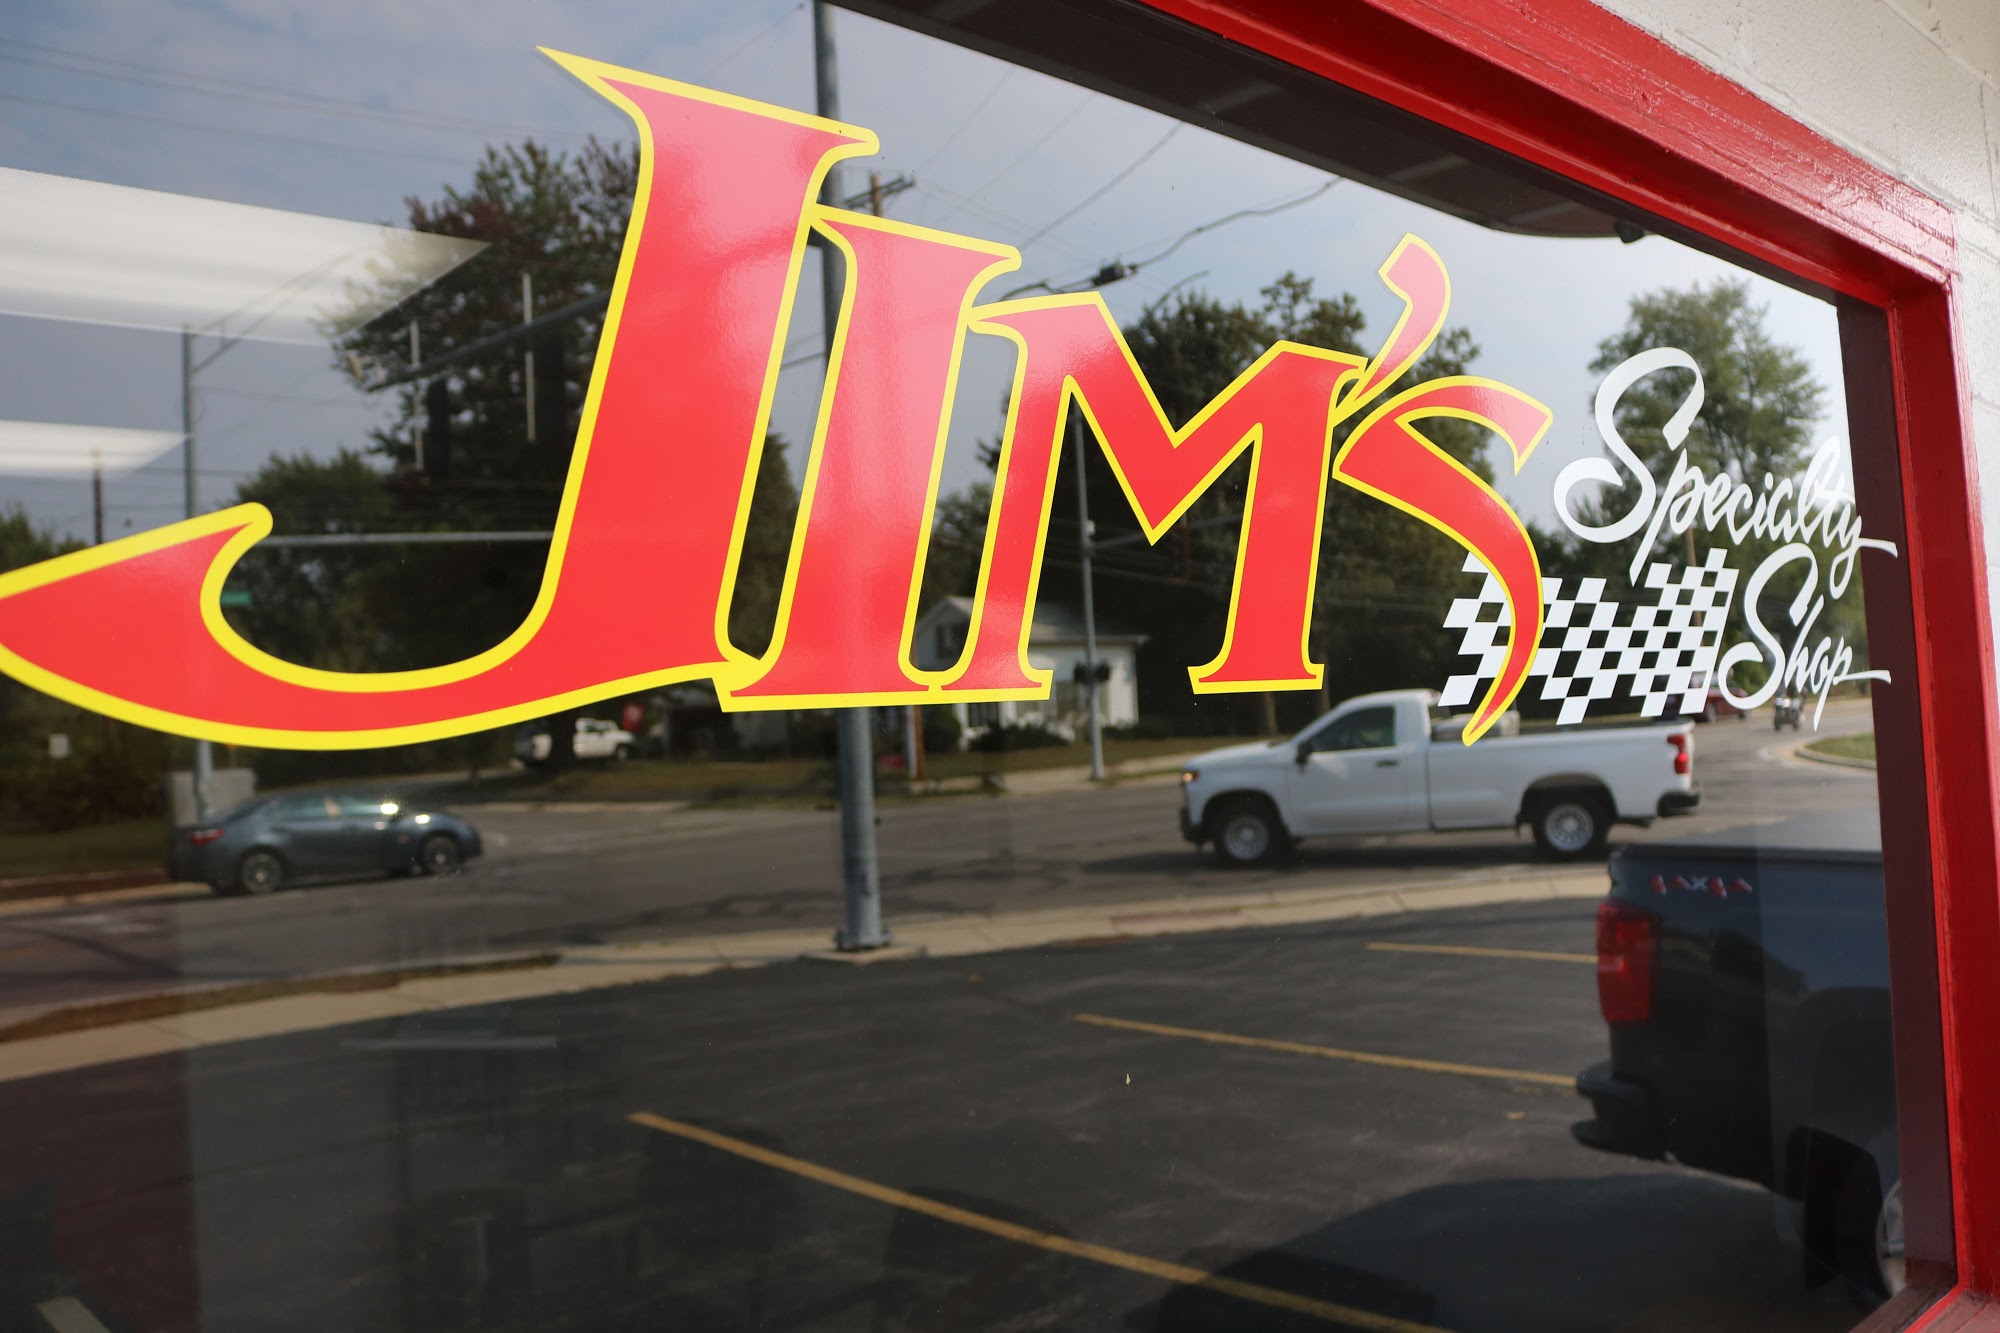 Jim's Specialty Shop Inc